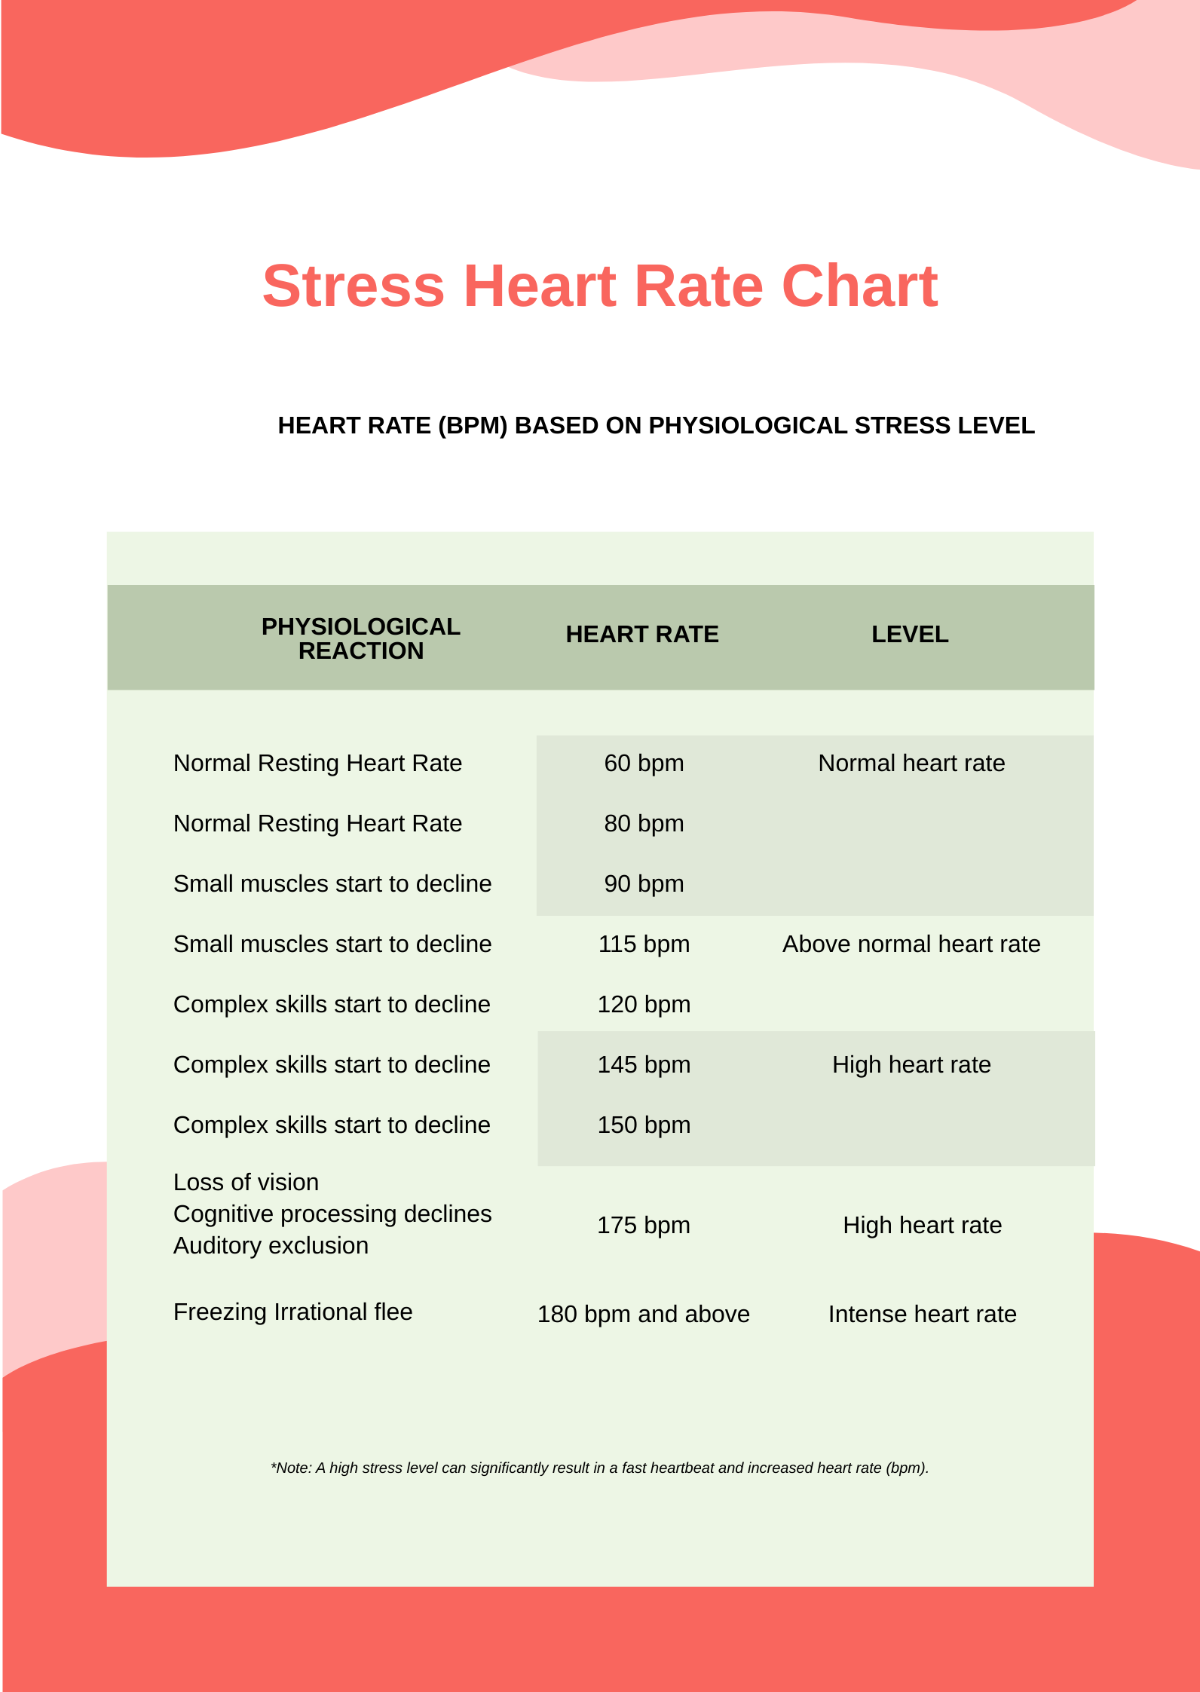 Stress Heart Rate Chart Template